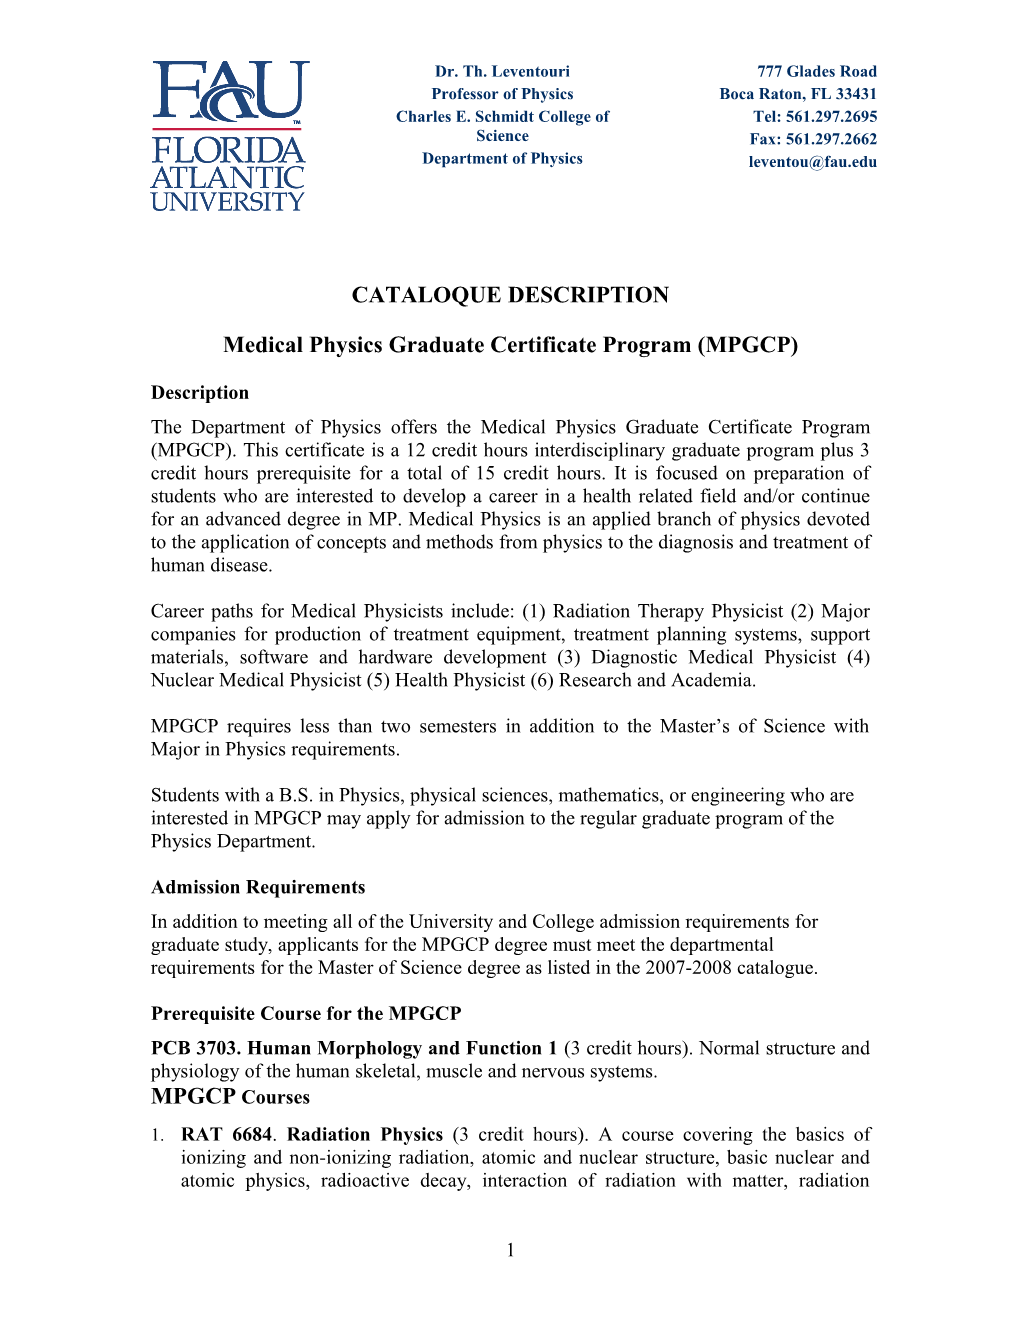 Medical Physics Graduate Certificate Program (MPGCP)